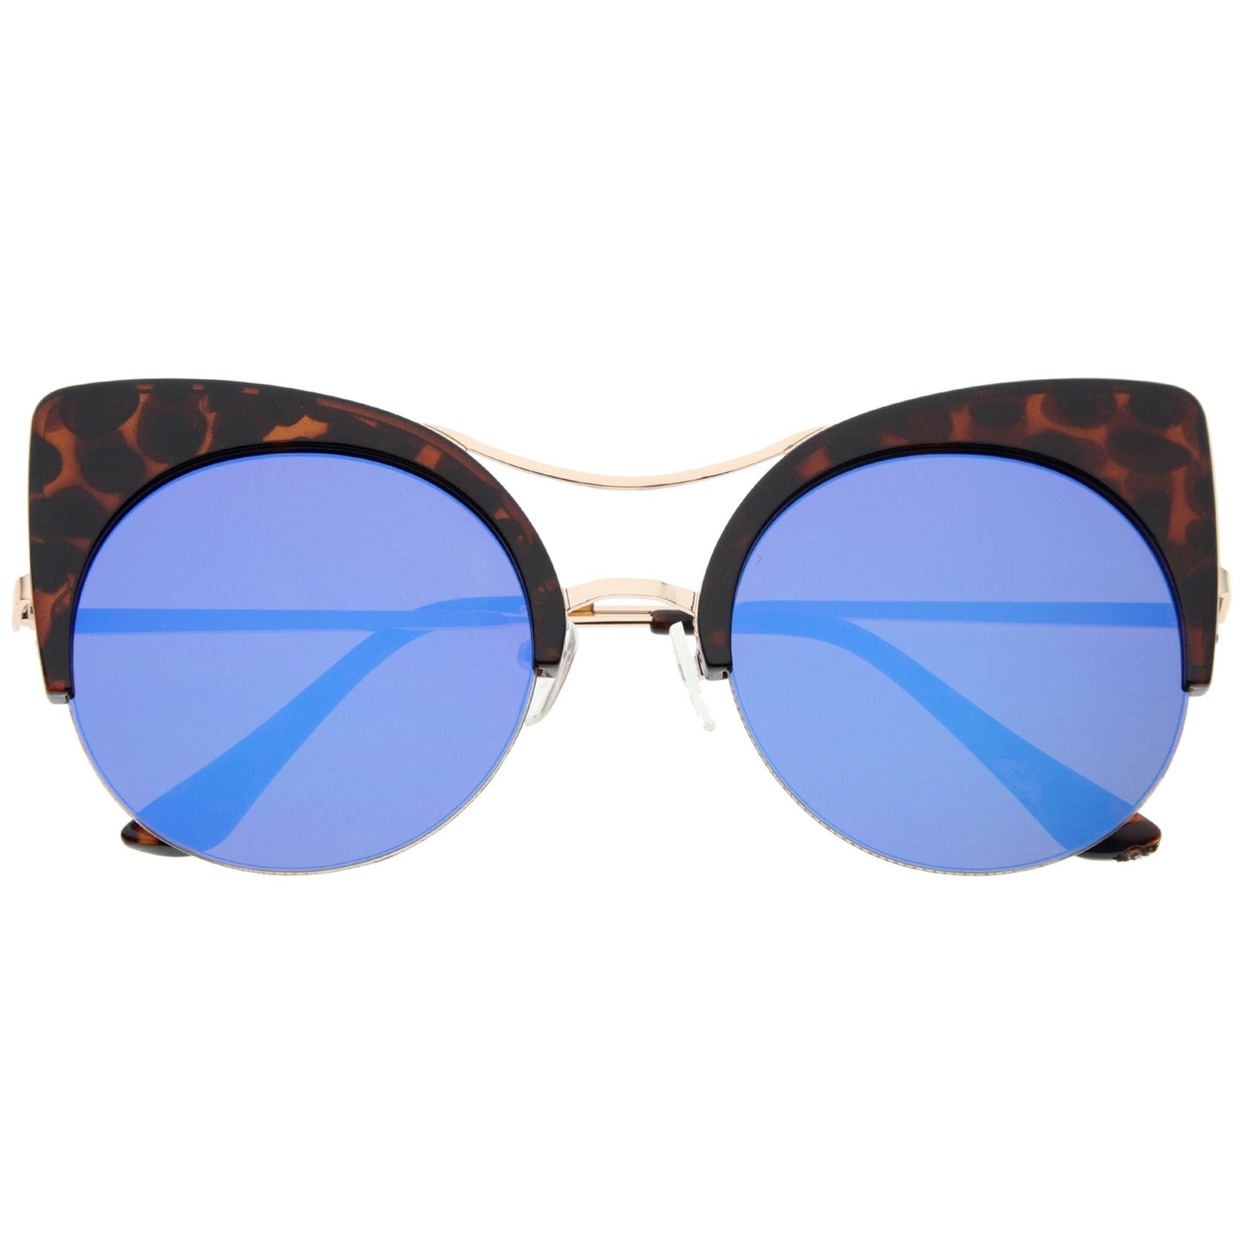 Womens Oversized Half Frame Semi-Rimless Flat Lens Round Cat Eye Sunglasses 60mm - White-Gold / Ice